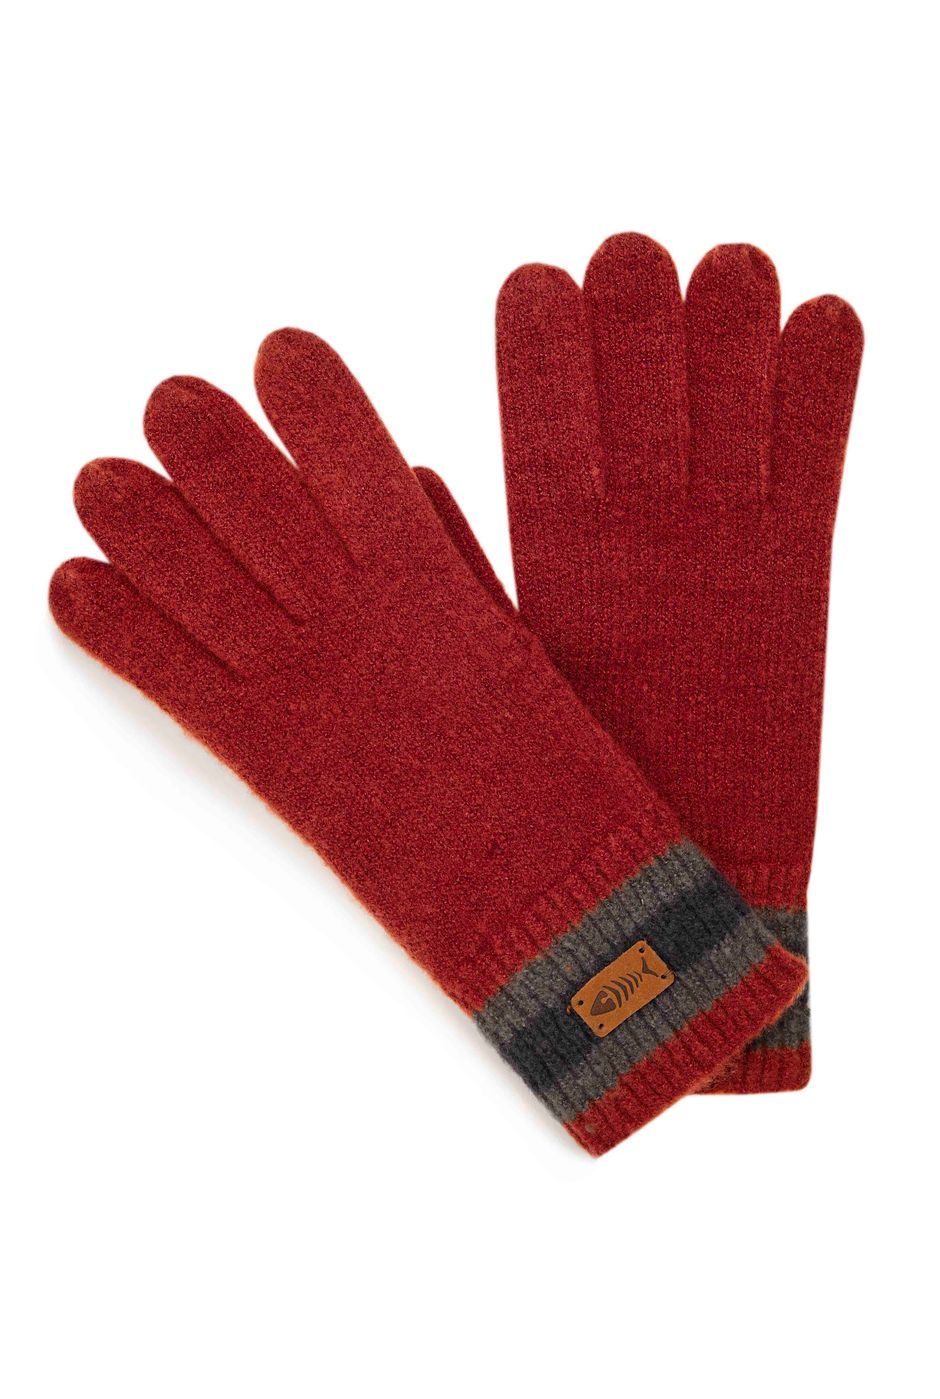 Kodiak Recycled Striped Gloves  Burnt Henna